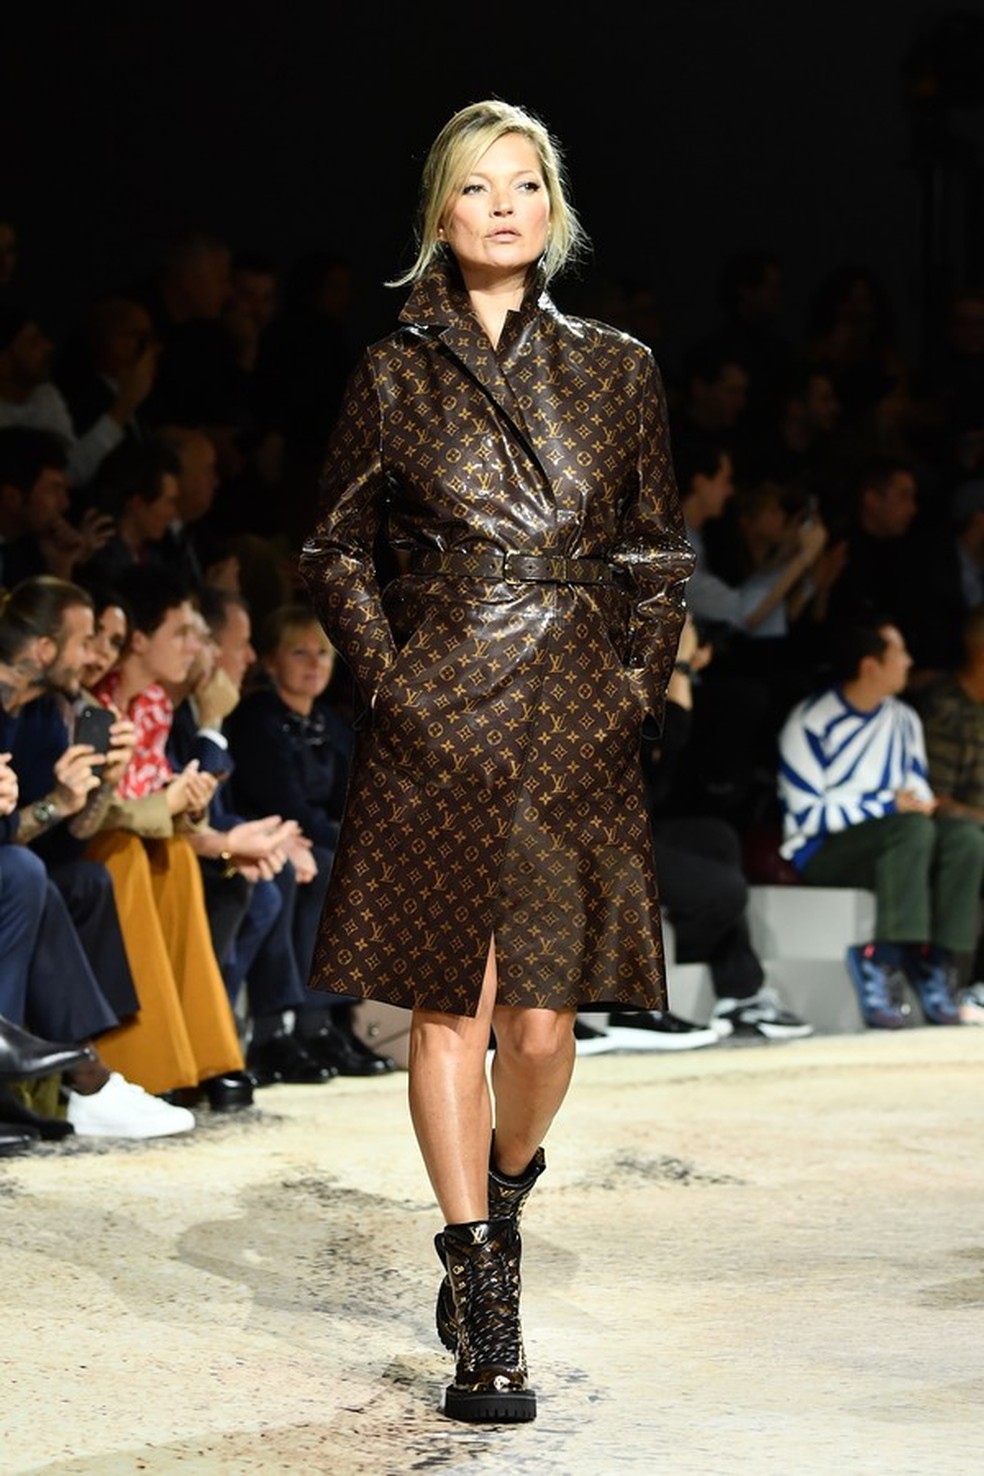 Homens estilosos (e Kate Moss!) na fila A da Louis Vuitton